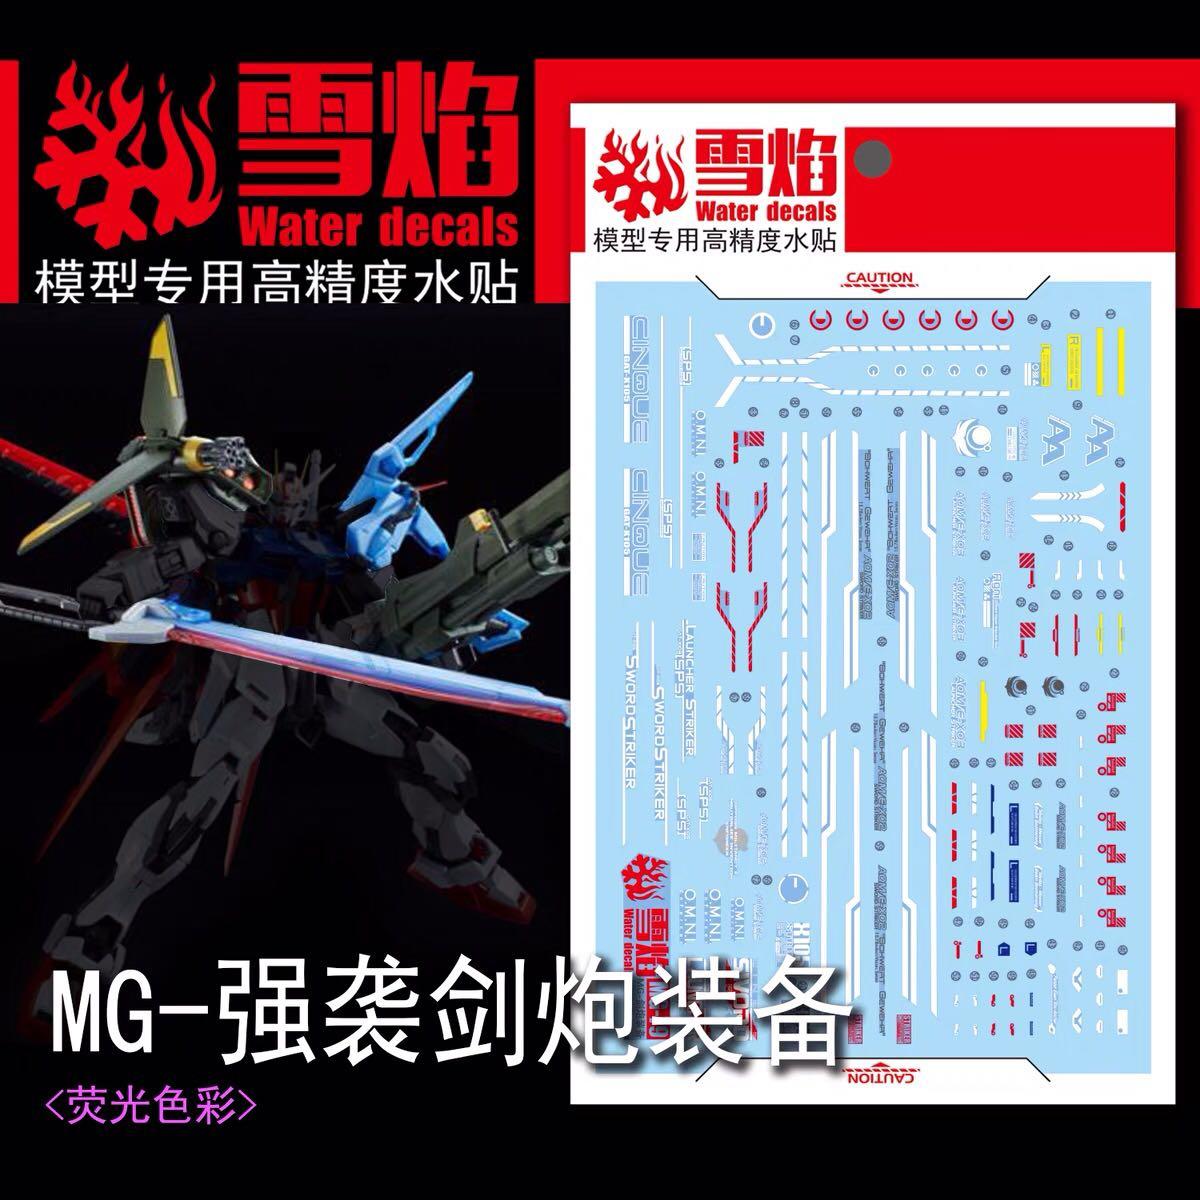 Xy Mg Strike Launcher Sword Gundam Waterslide By Xueyan 1 100 Uv Light Reactive Hobbies Toys Toys Games On Carousell